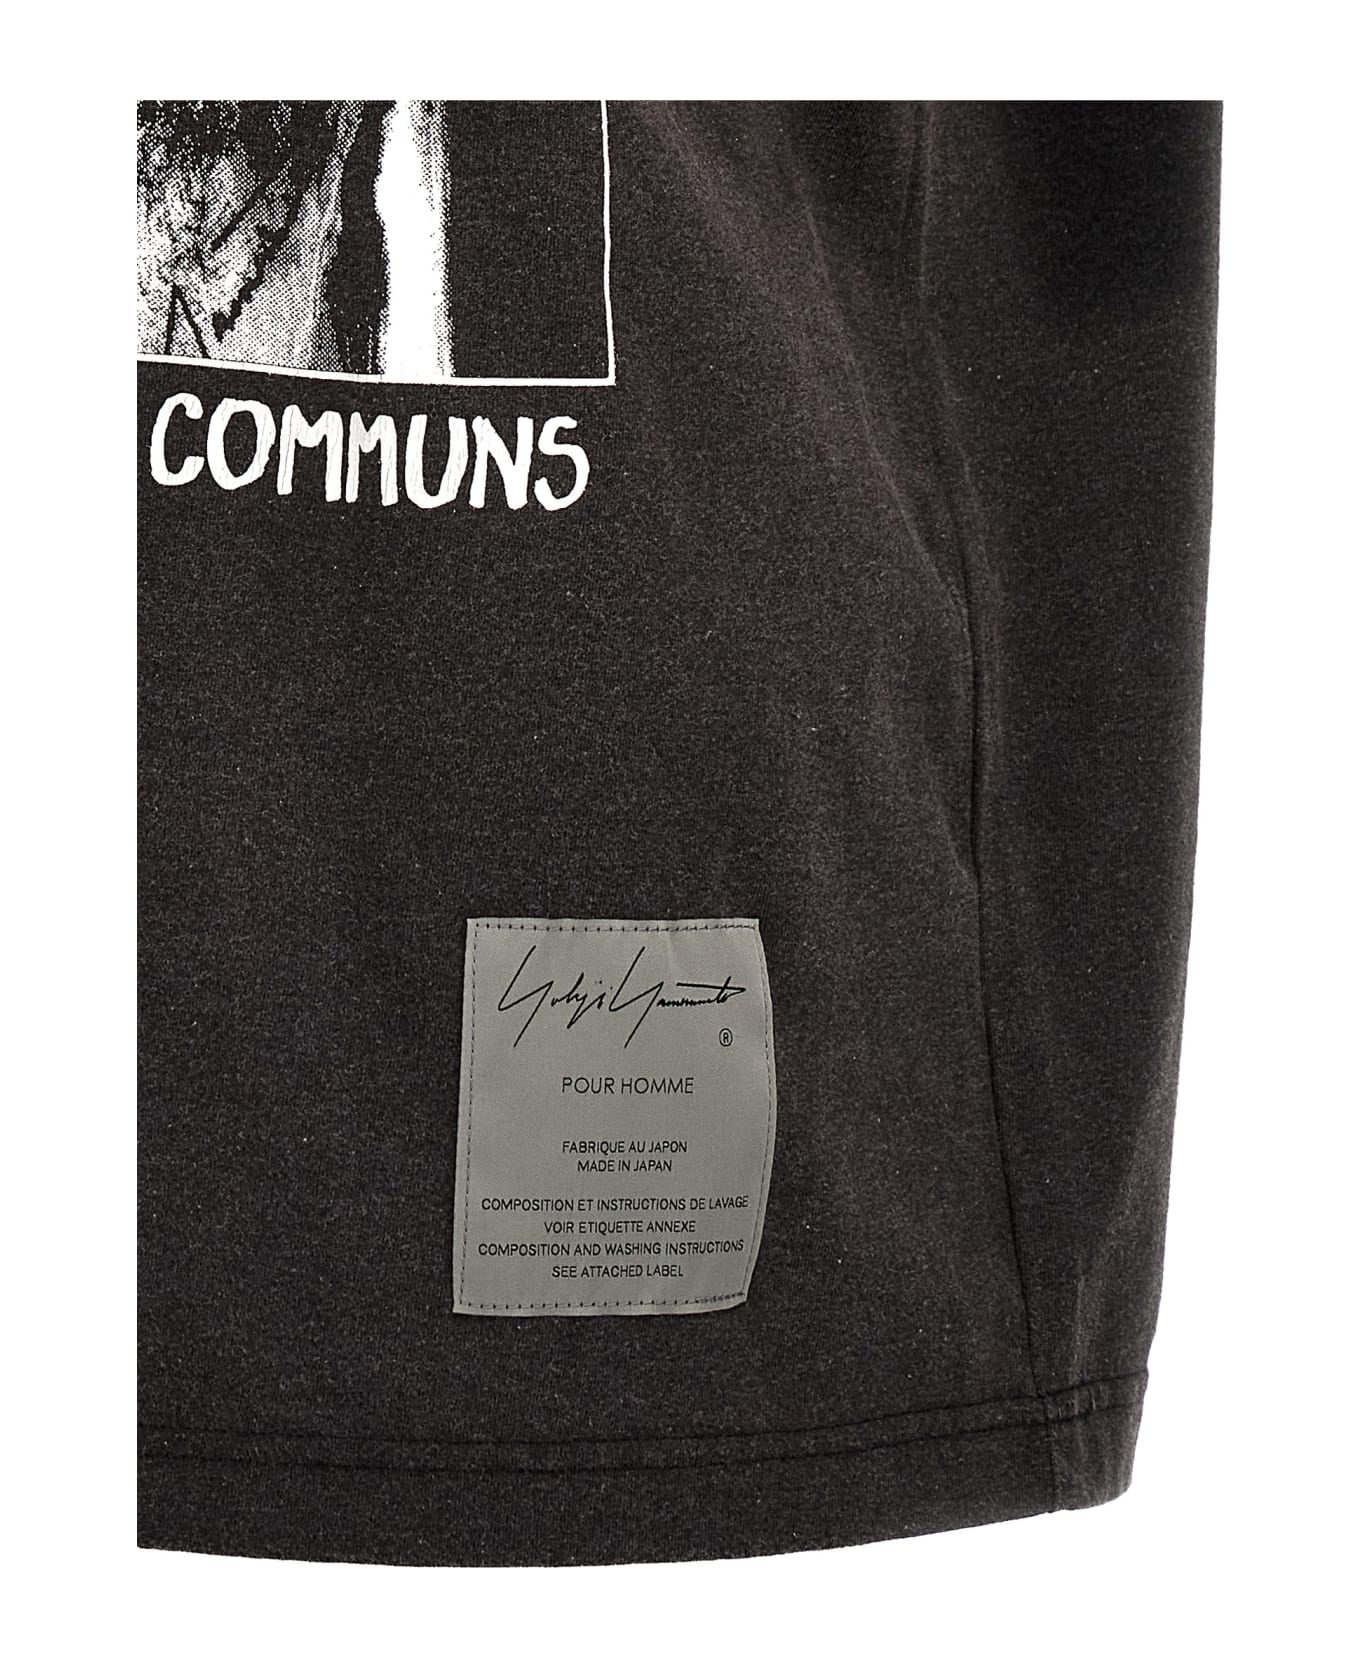 Yohji Yamamoto 'neighborhood' T-shirt - Gray